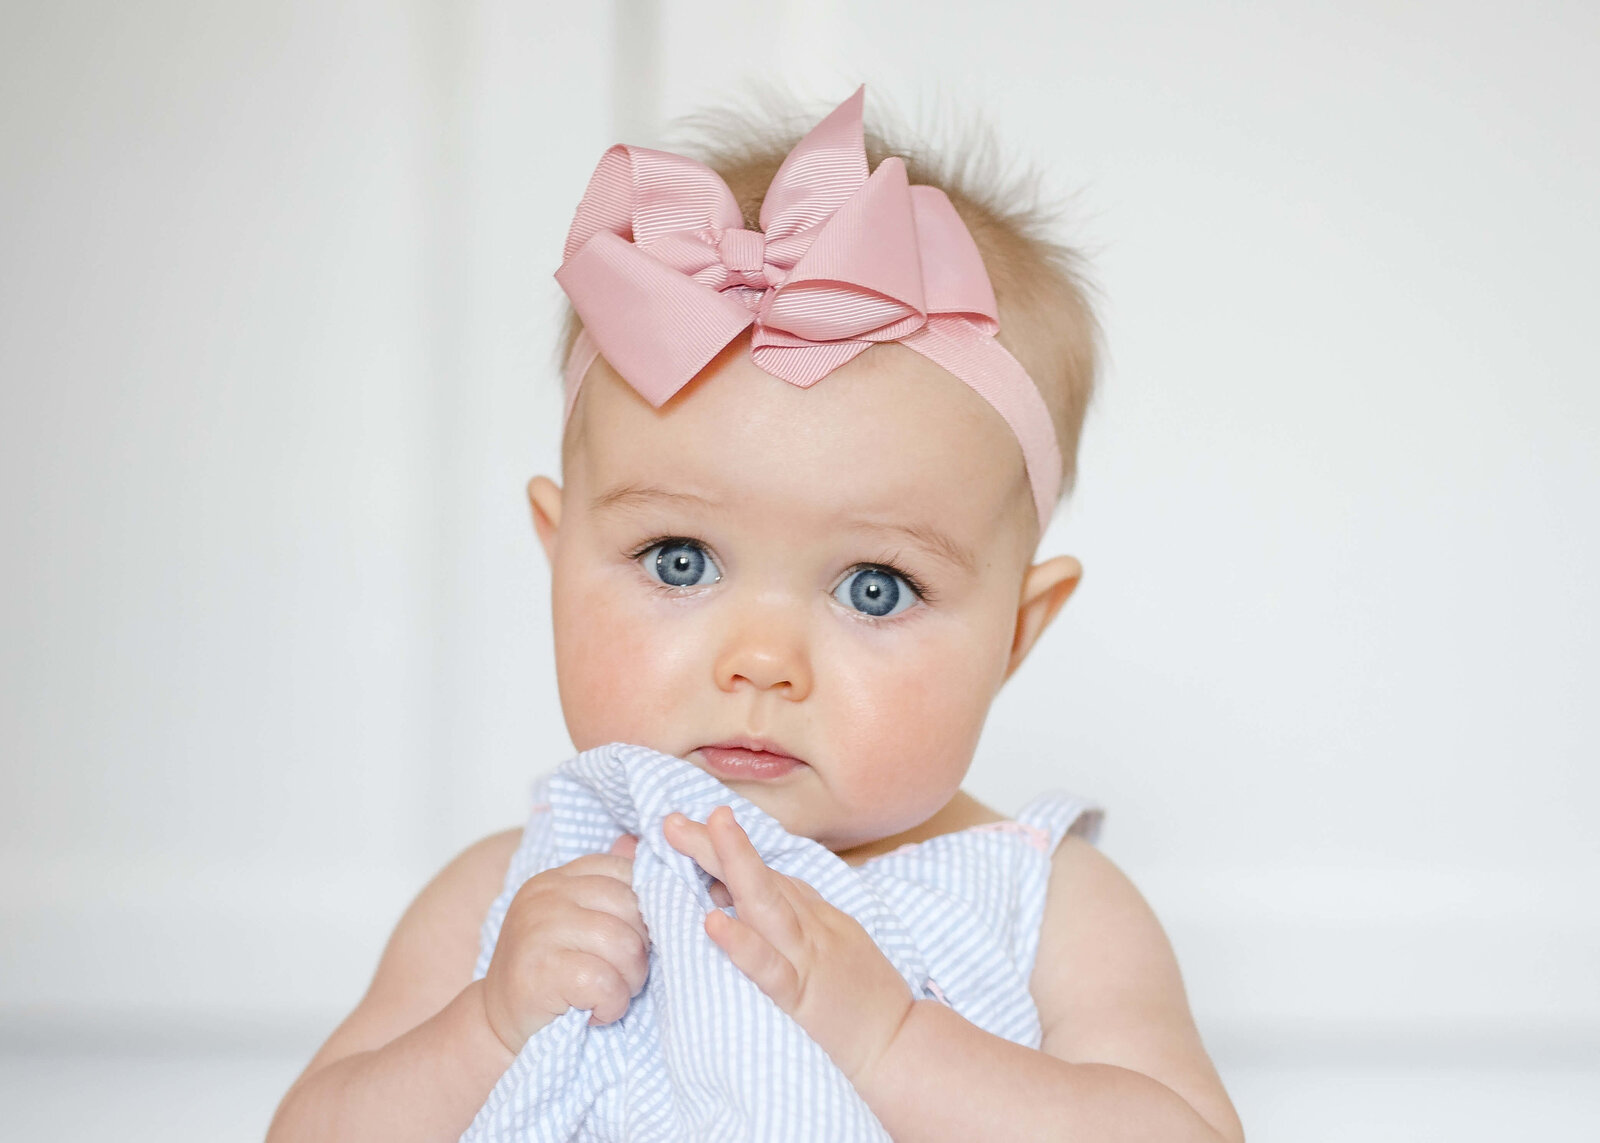 Bashful baby with oversized pink bow